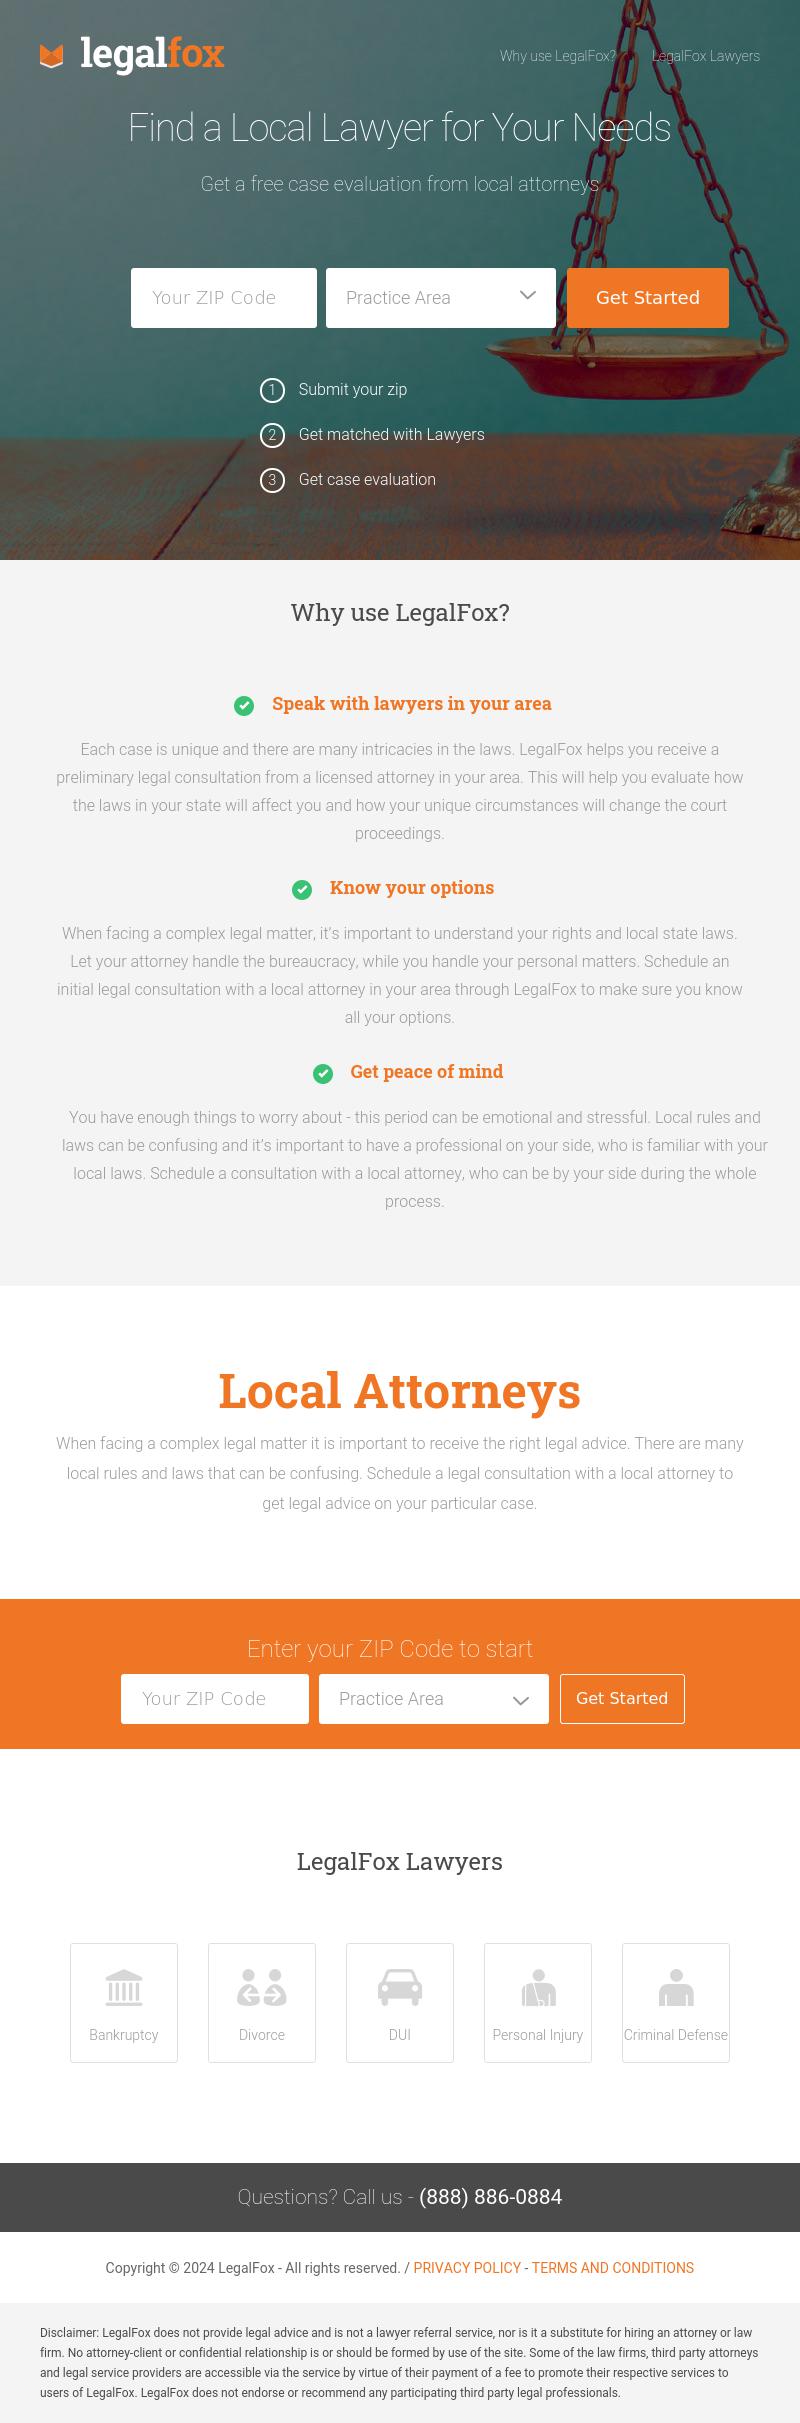 Find a Local Attorney - Virginia Beach VA Lawyers